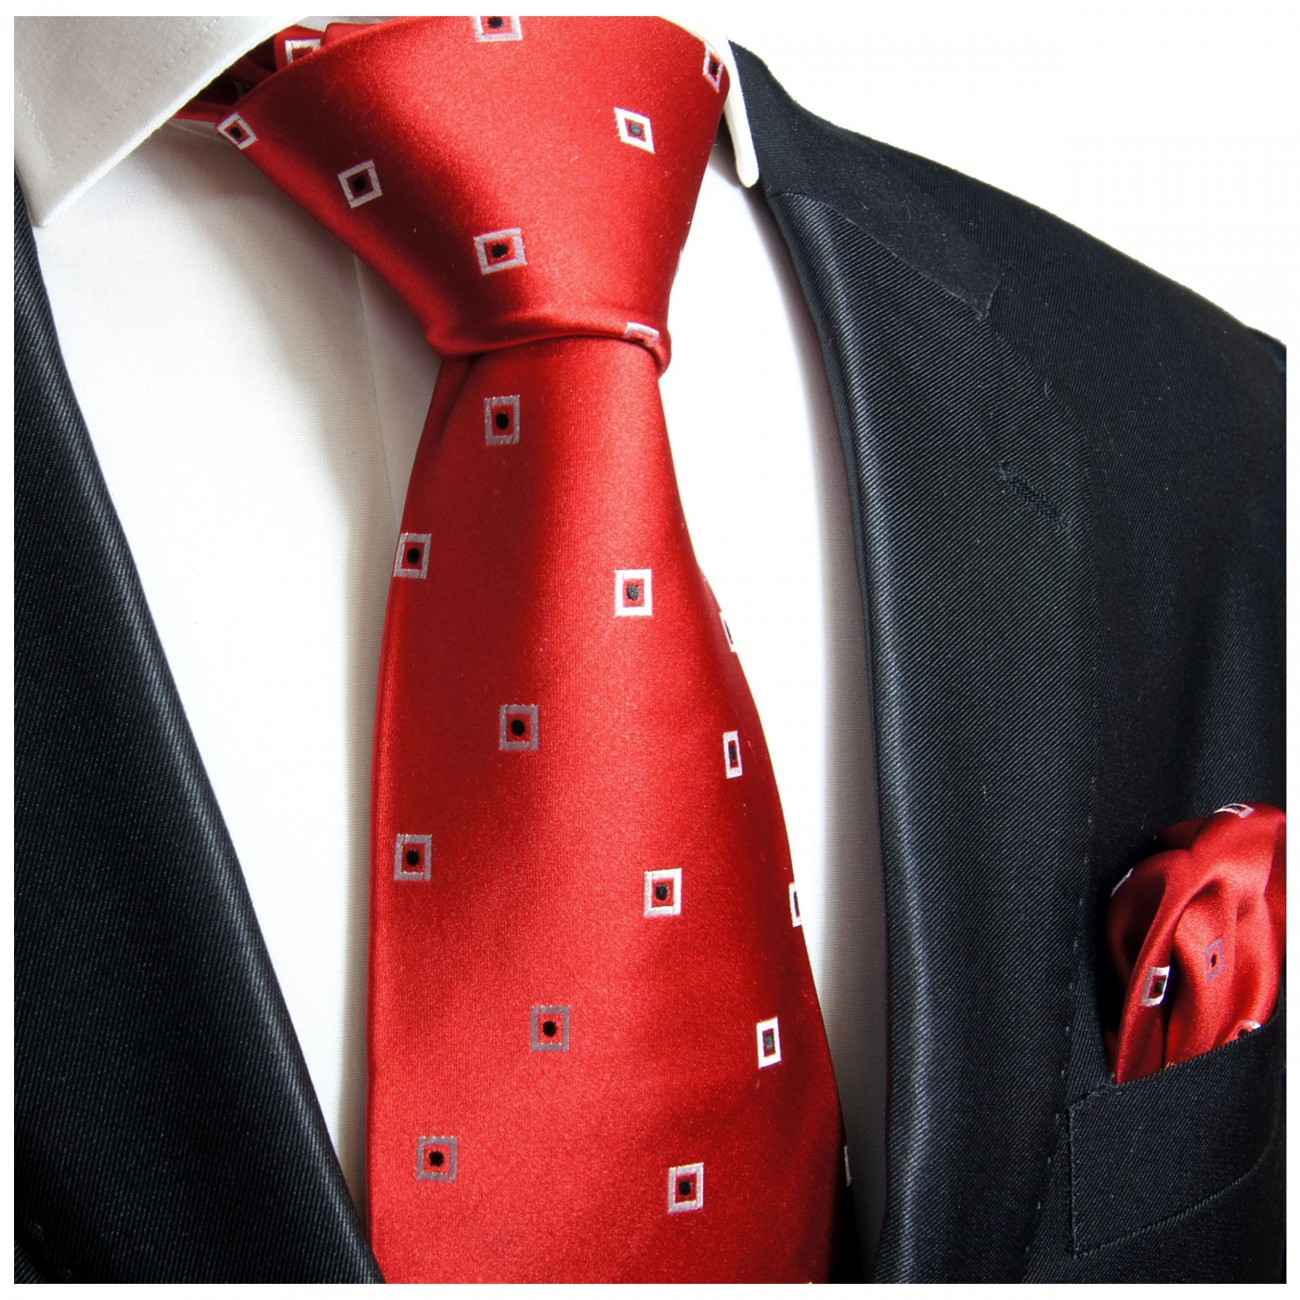 Paul Malone XL Krawatte 165cm rot gepunktete Seidenkrawatte 721